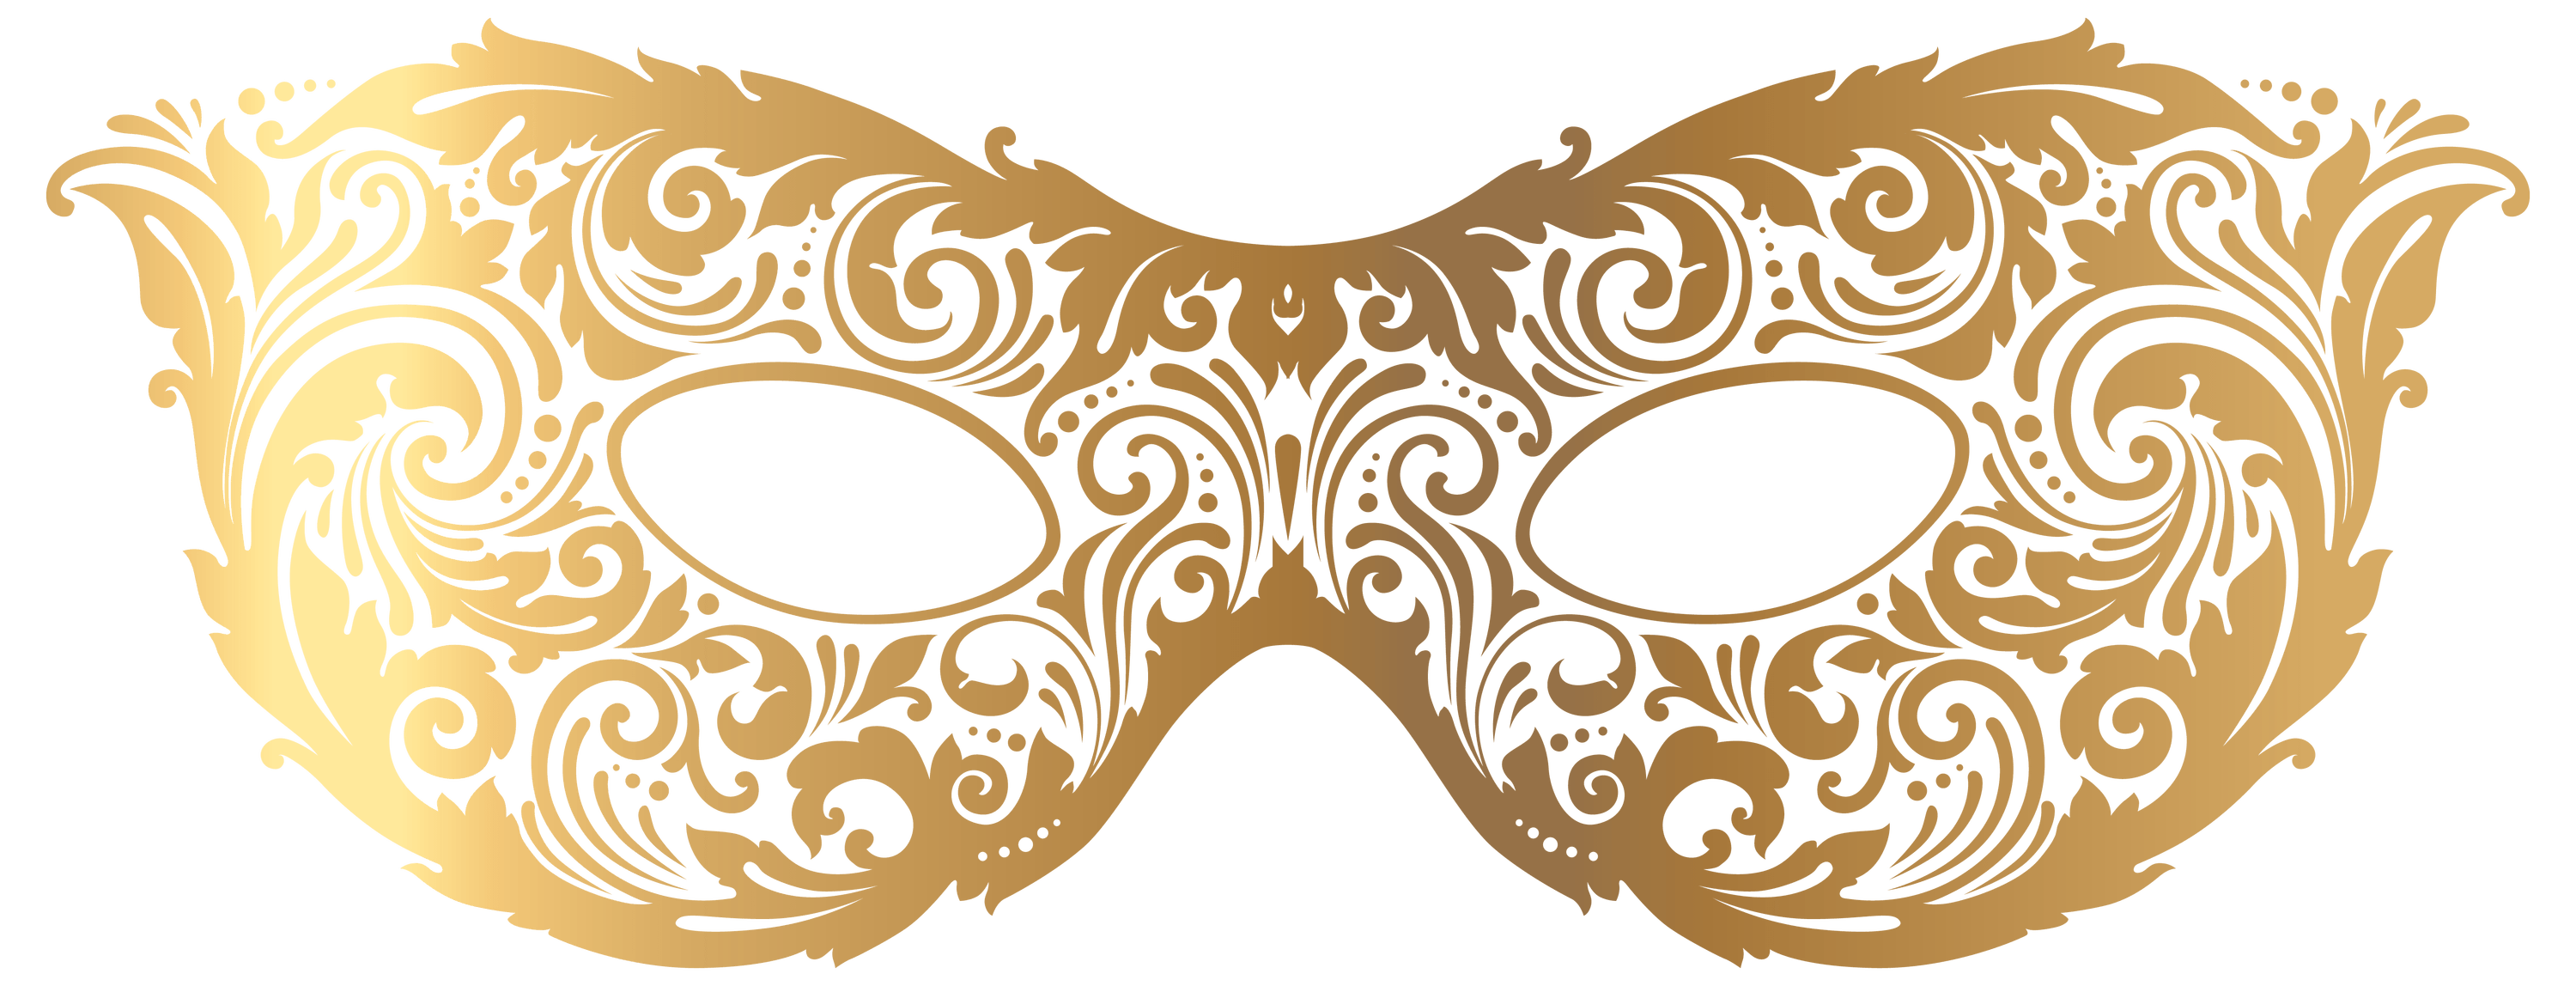 Gold Carnival Mask SVG Clip arts